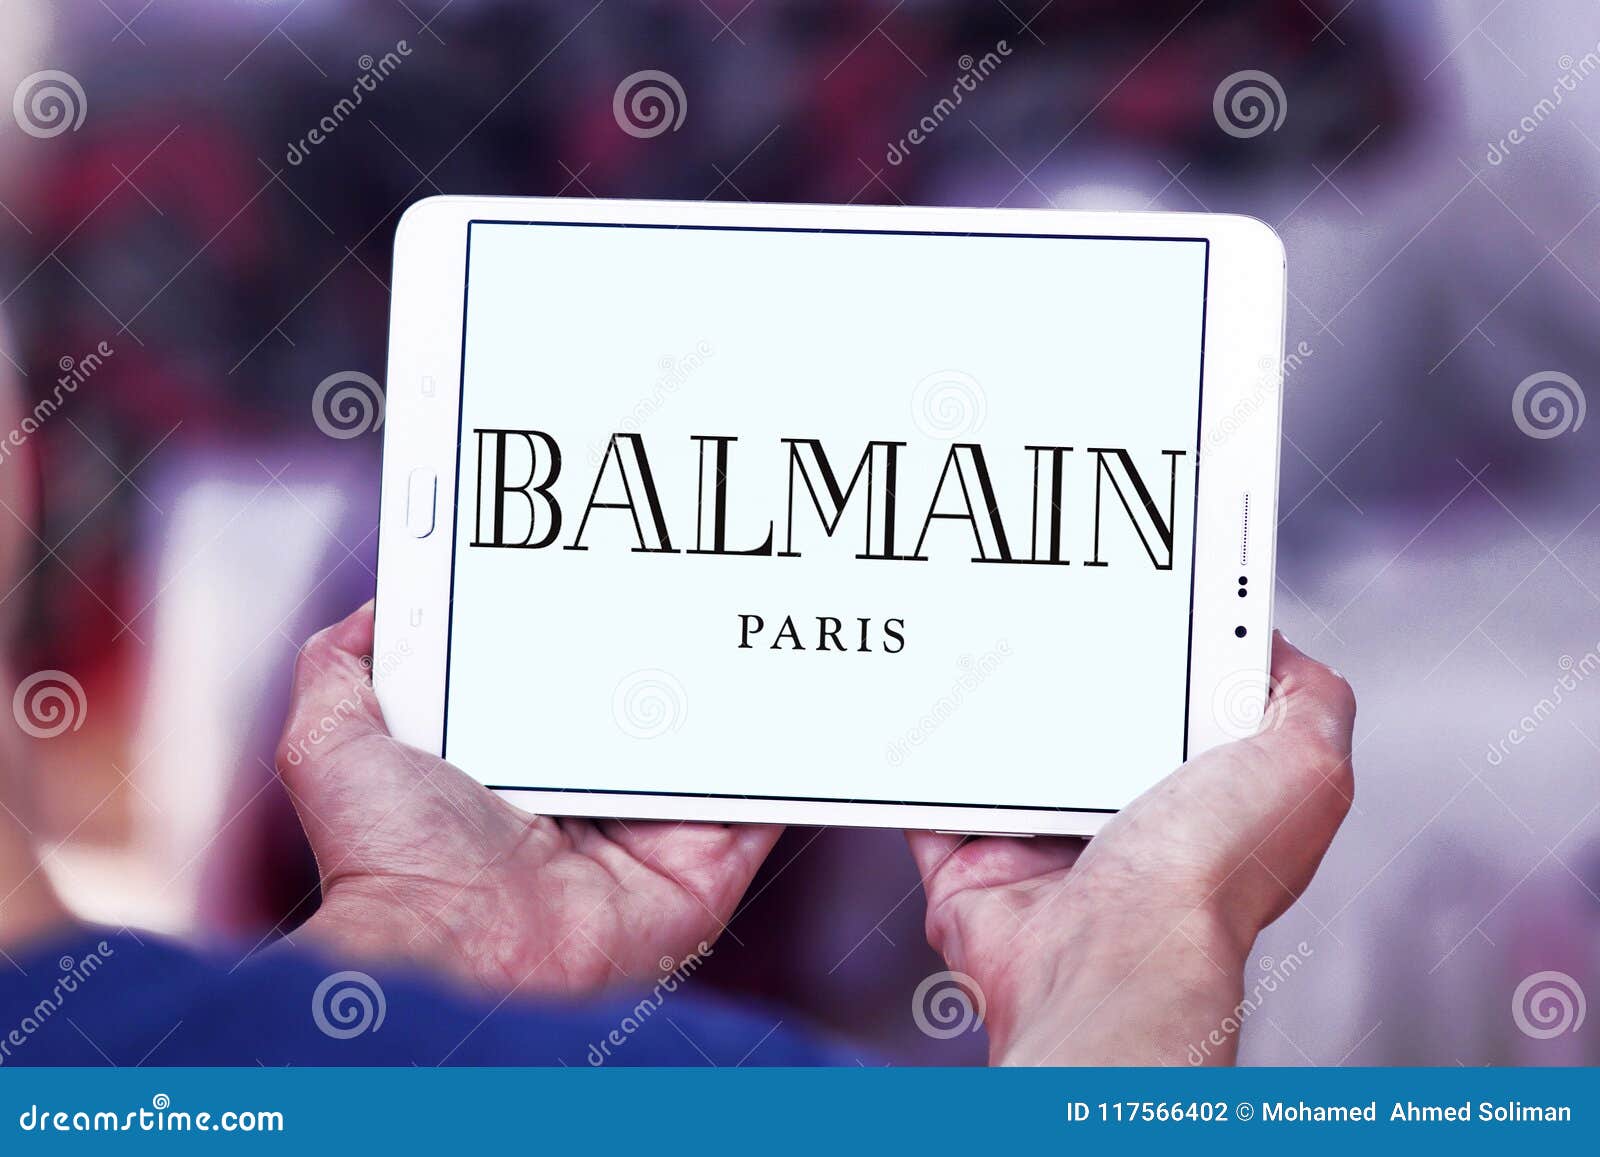 Balmain fashion house logo photography. Image of